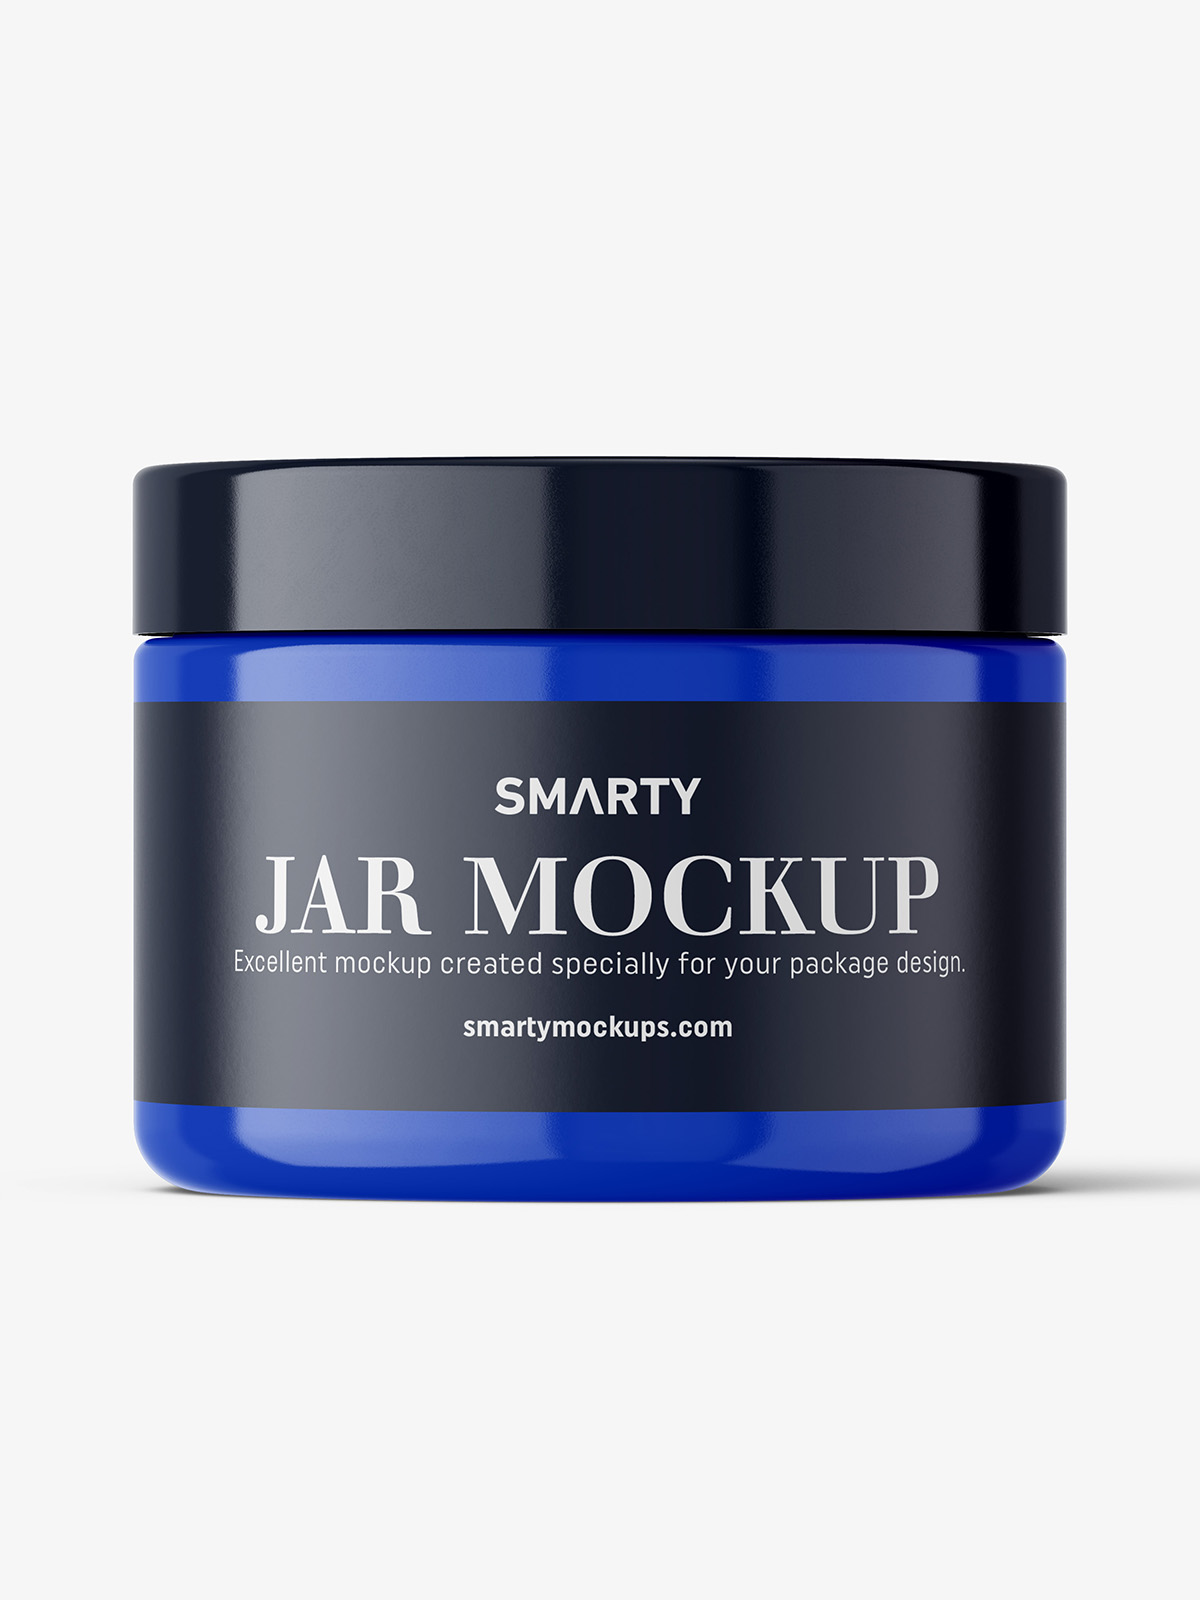 Glossy cosmetic jar mockup - Smarty Mockups